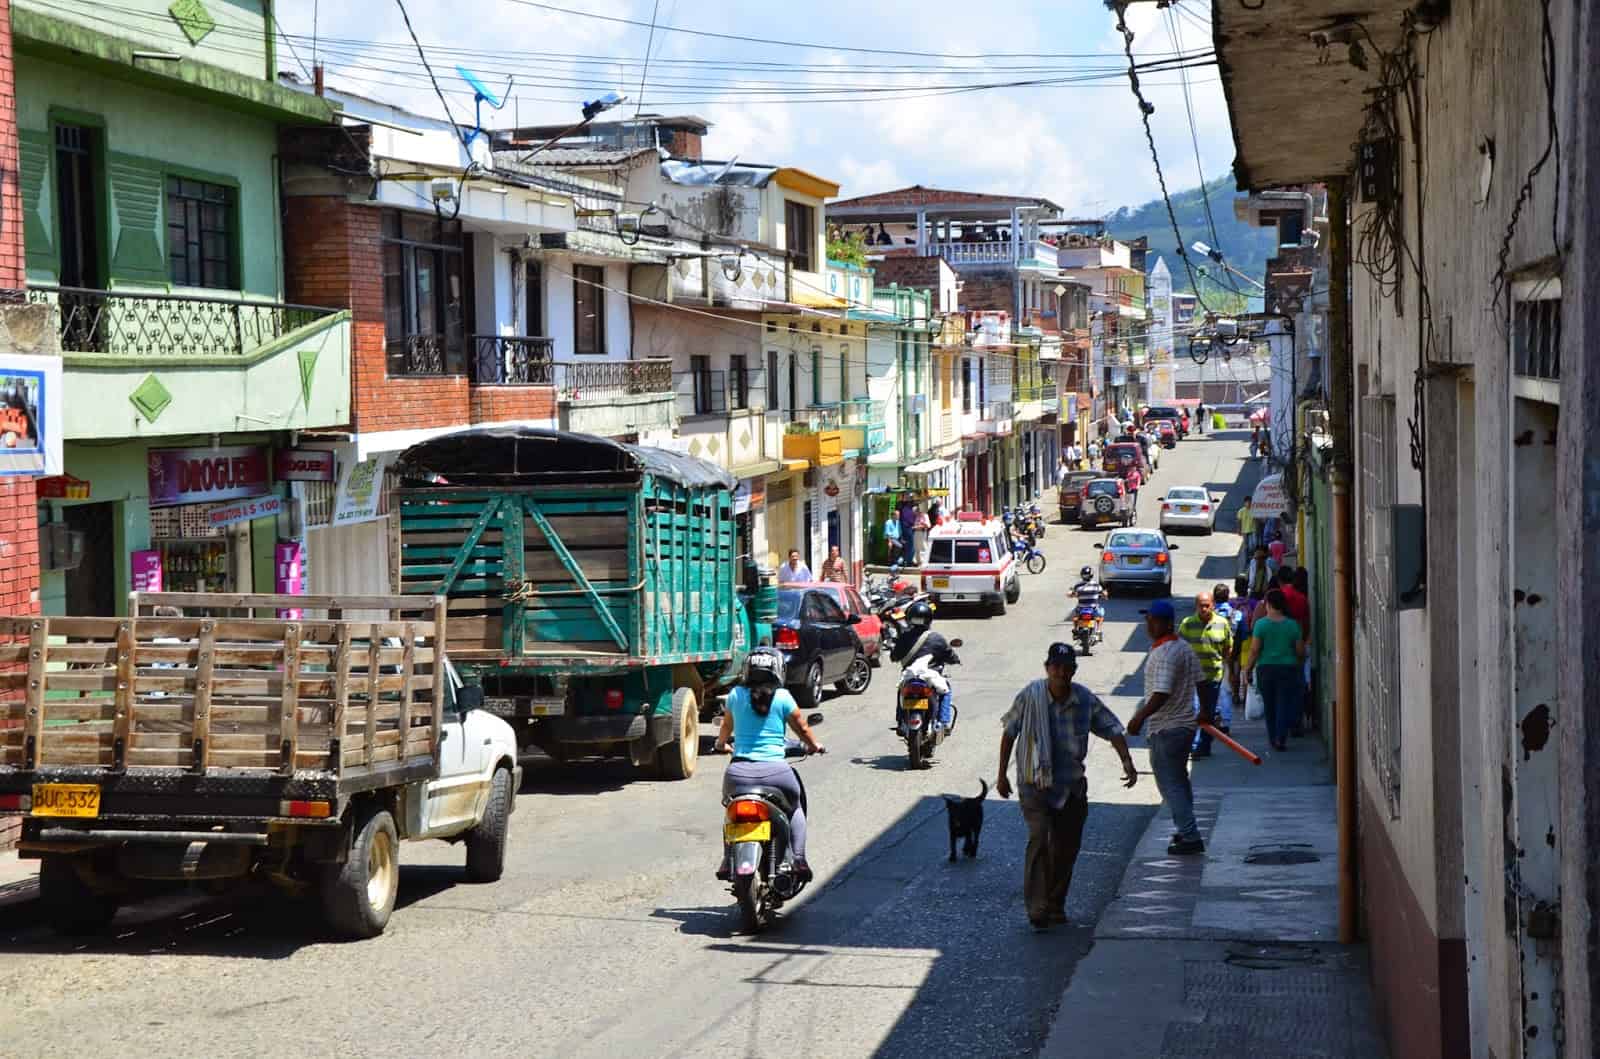 A street in Anserma, Caldas, Colombia